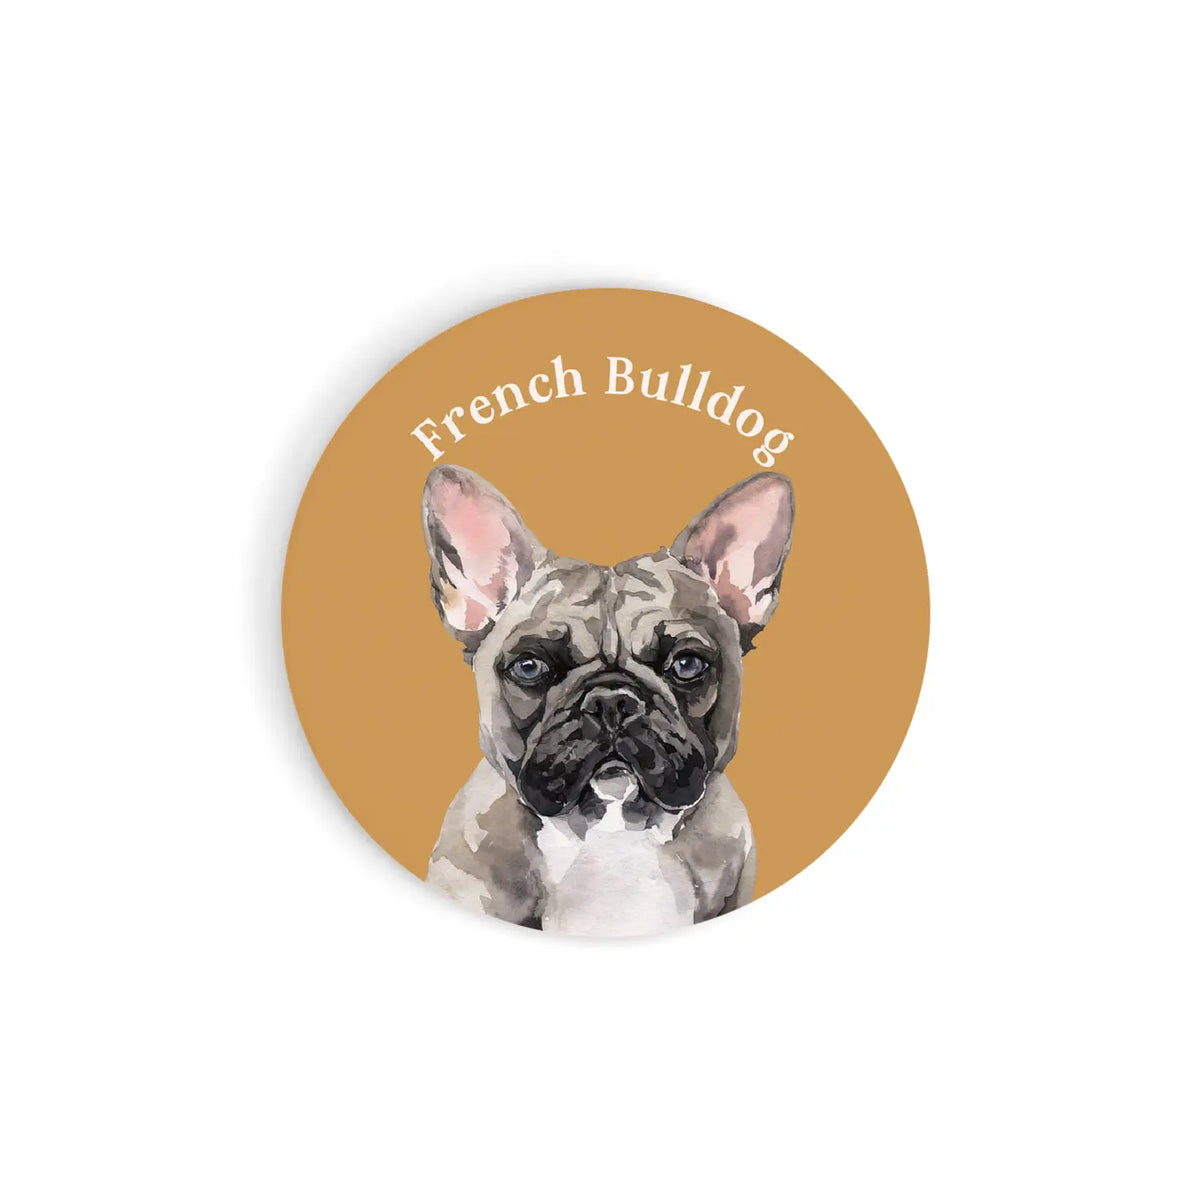 French Bulldog Car Coaster